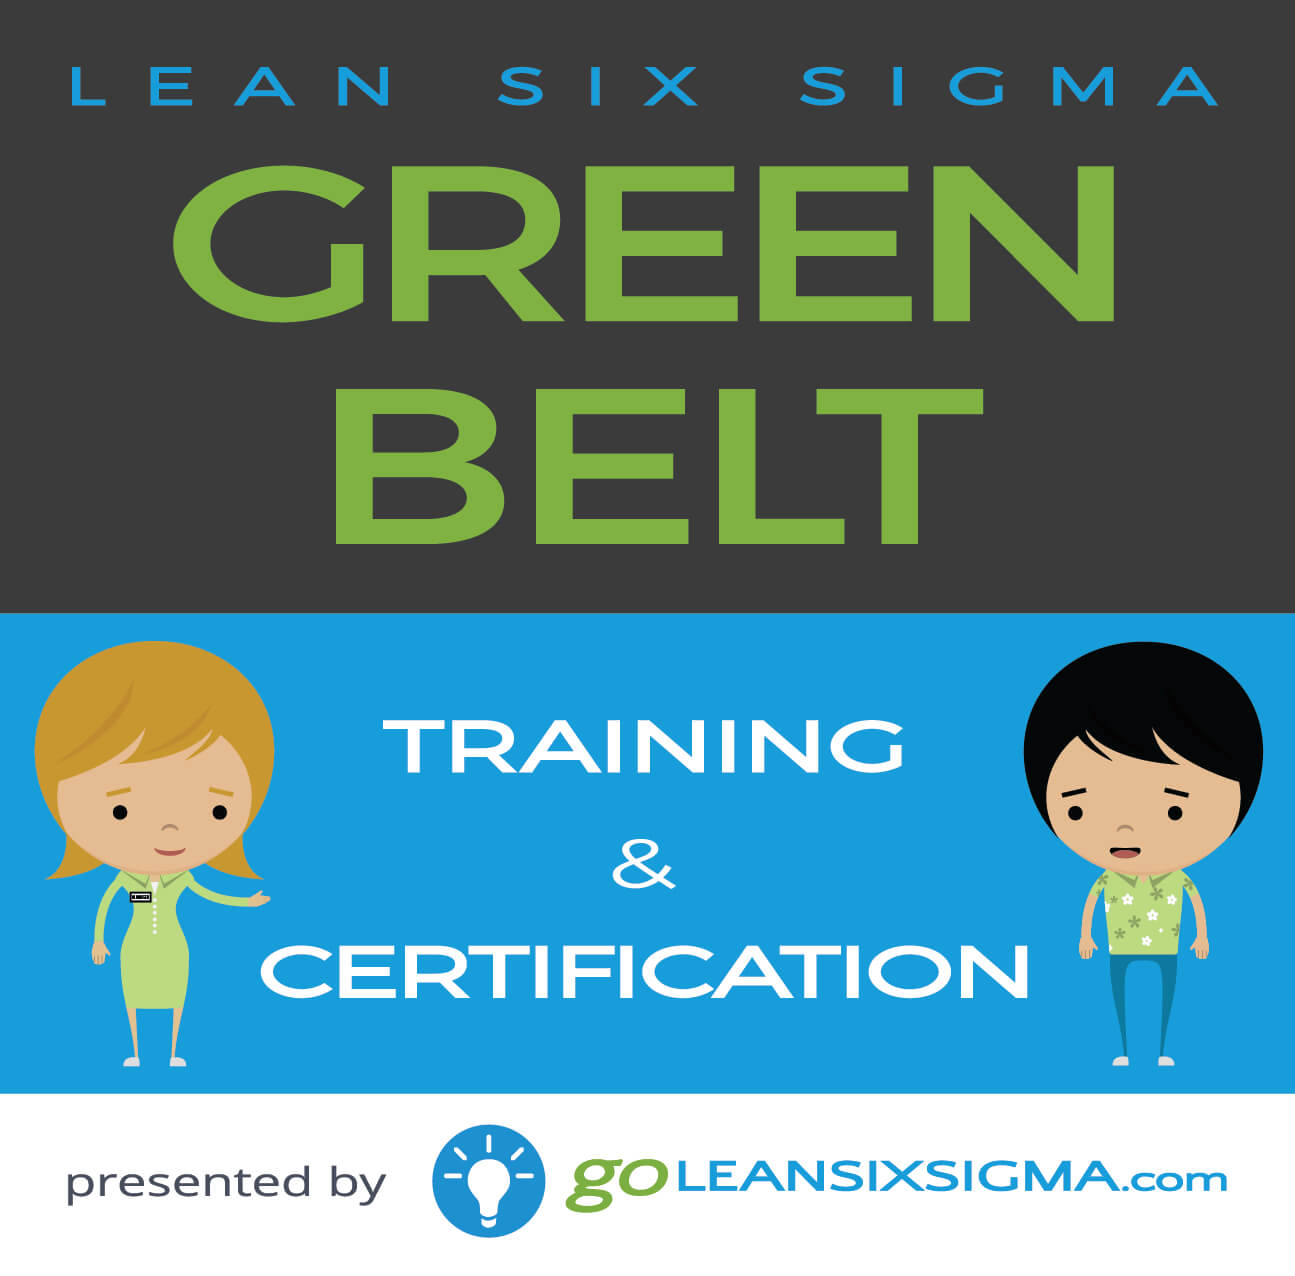 Online Green Belt Training Certification Goleansixsigma with regard